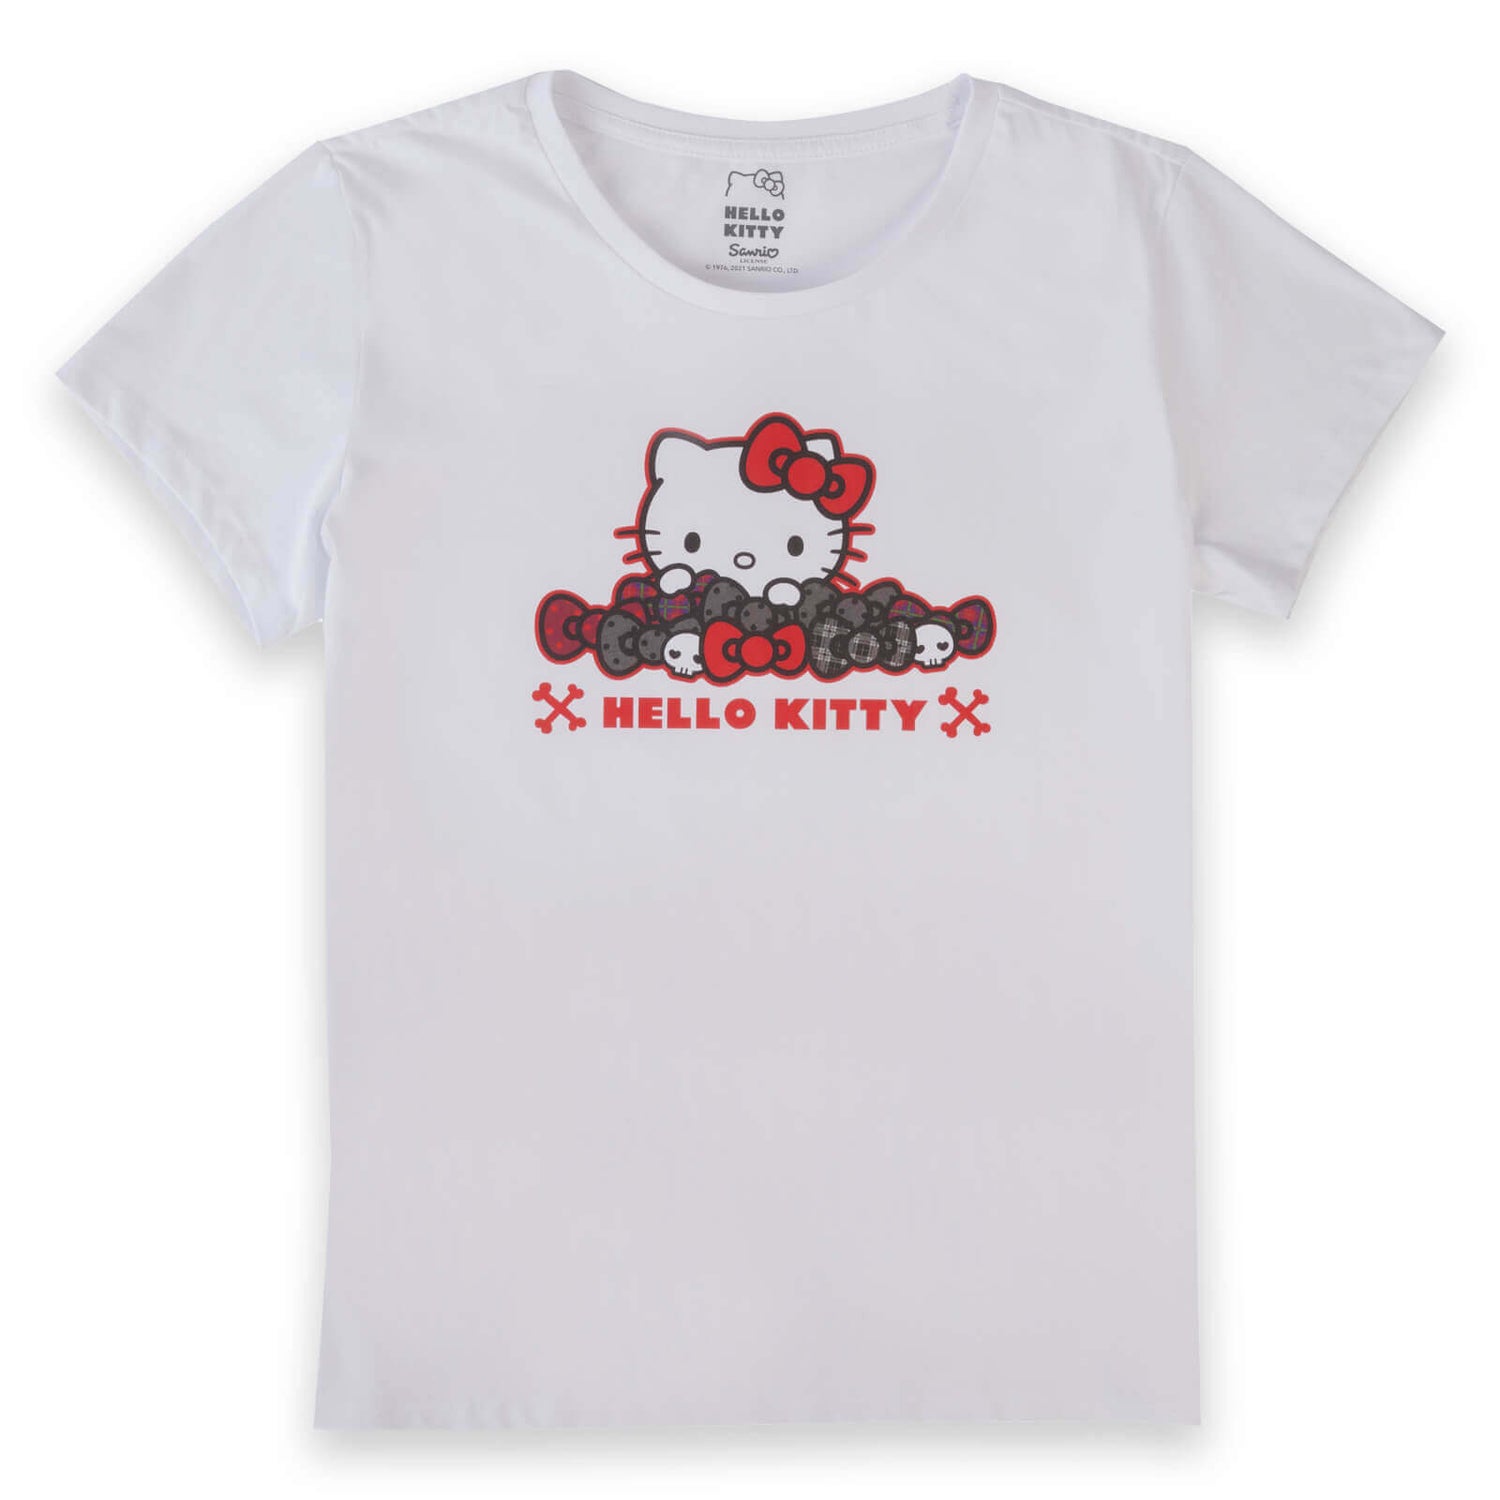 Camiseta Hello Kitty para hombre - Blanco